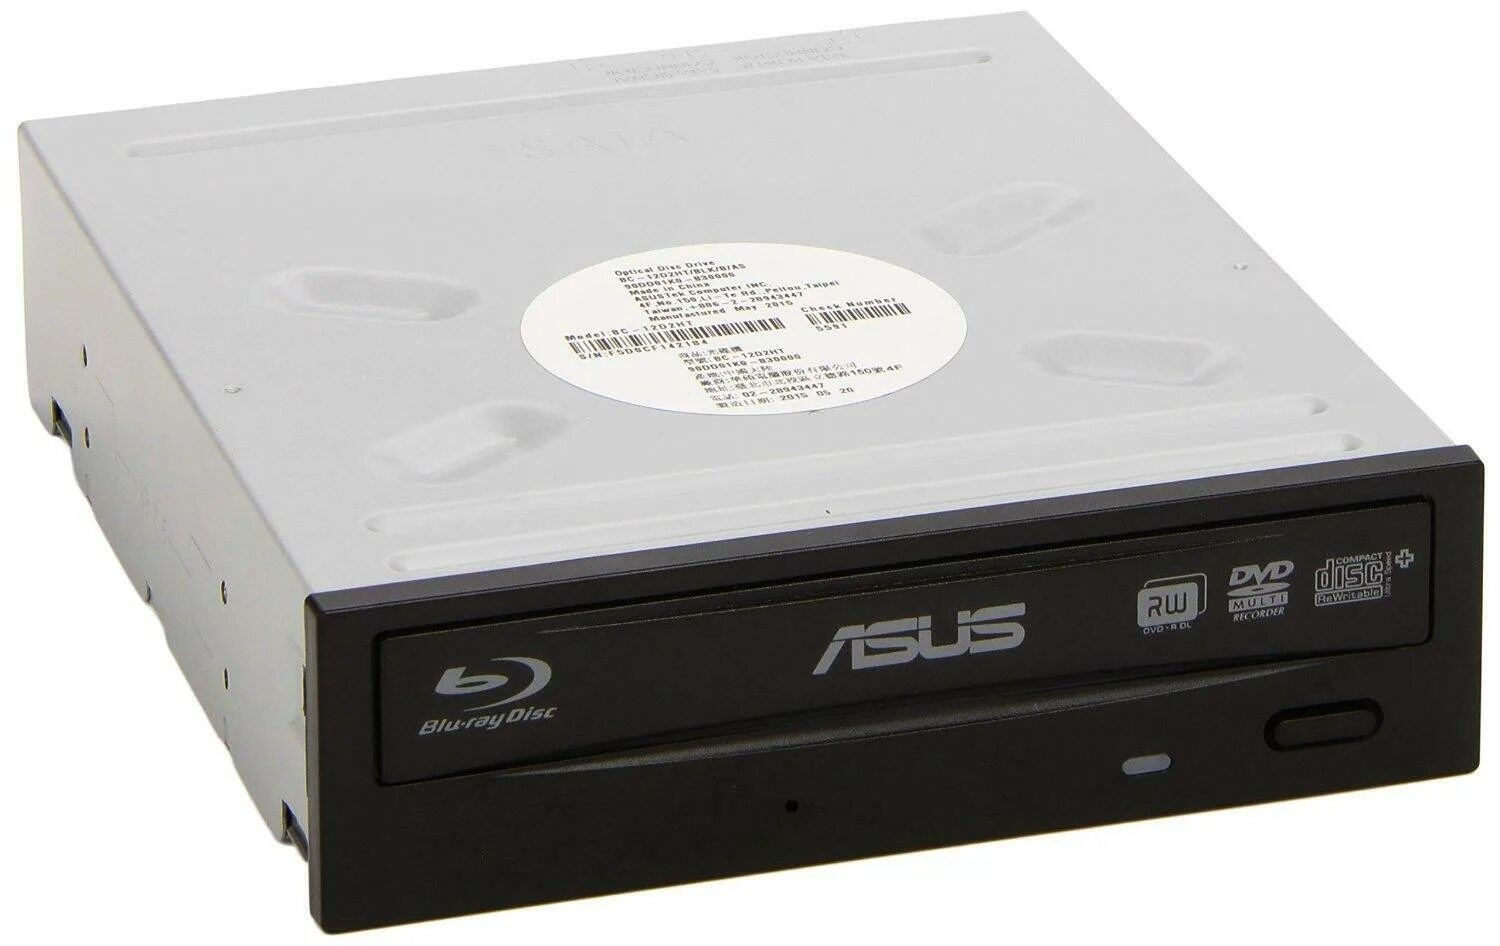 Оптический привод Blu-ray ASUS BC-12d2ht (BC-12d2ht/BLK/B/as). Привод SATA DVD±ROM LG (dh18ns61). CD DVD RW привод ASUS. Привод Blu-ray ASUS BC-12d2ht оптические Pioneer DVR xu01t.